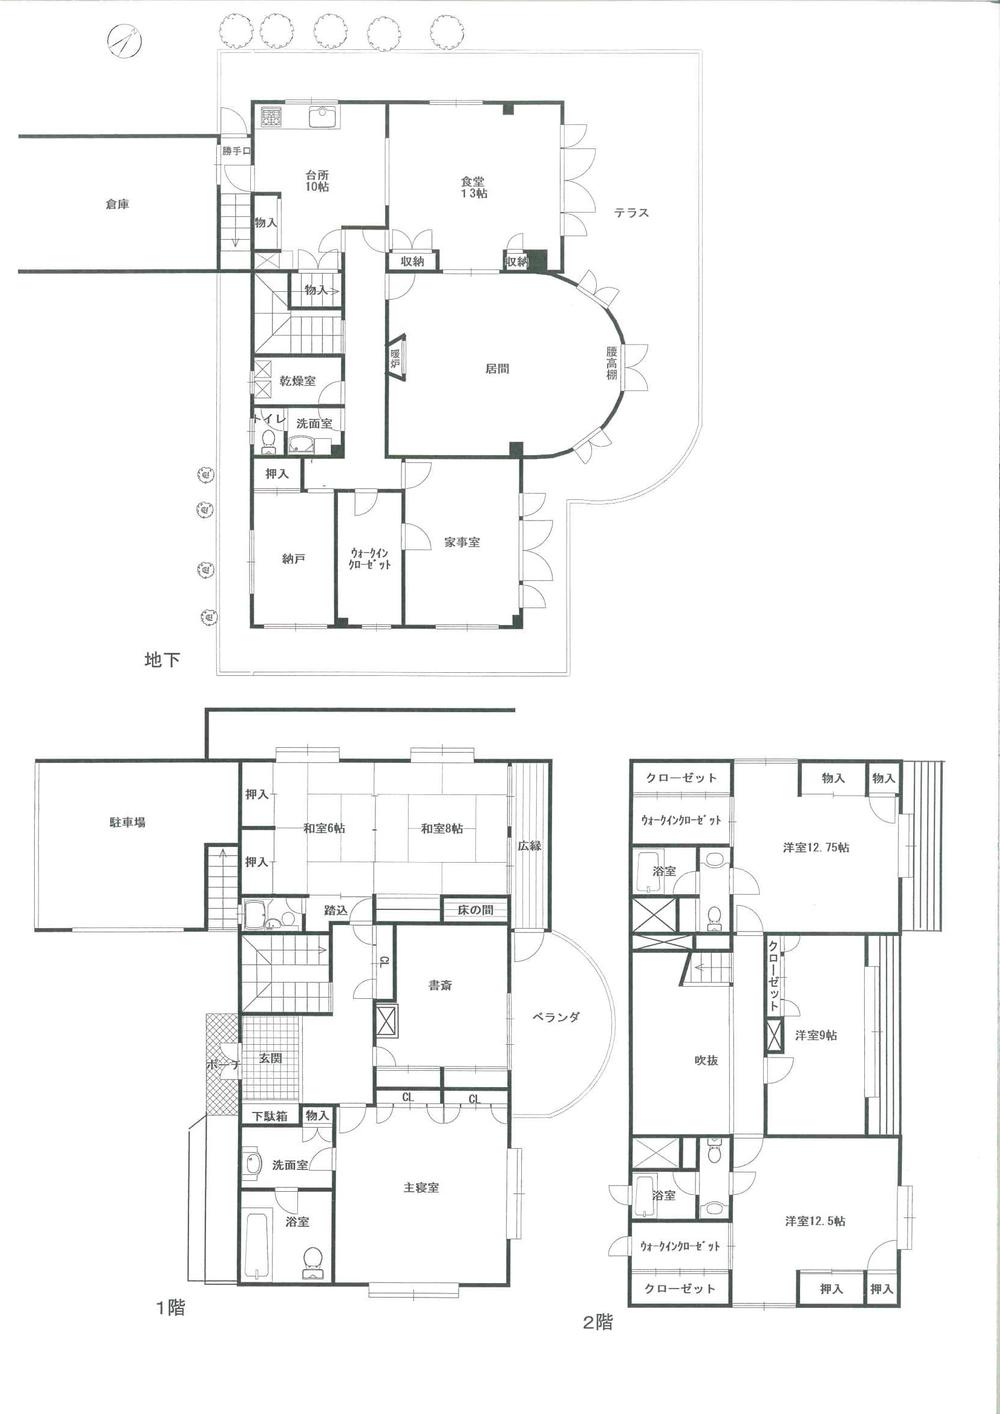 Floor plan. 140 million yen, 8LDK + S (storeroom), Land area 1,322 sq m , Building area 481.03 sq m